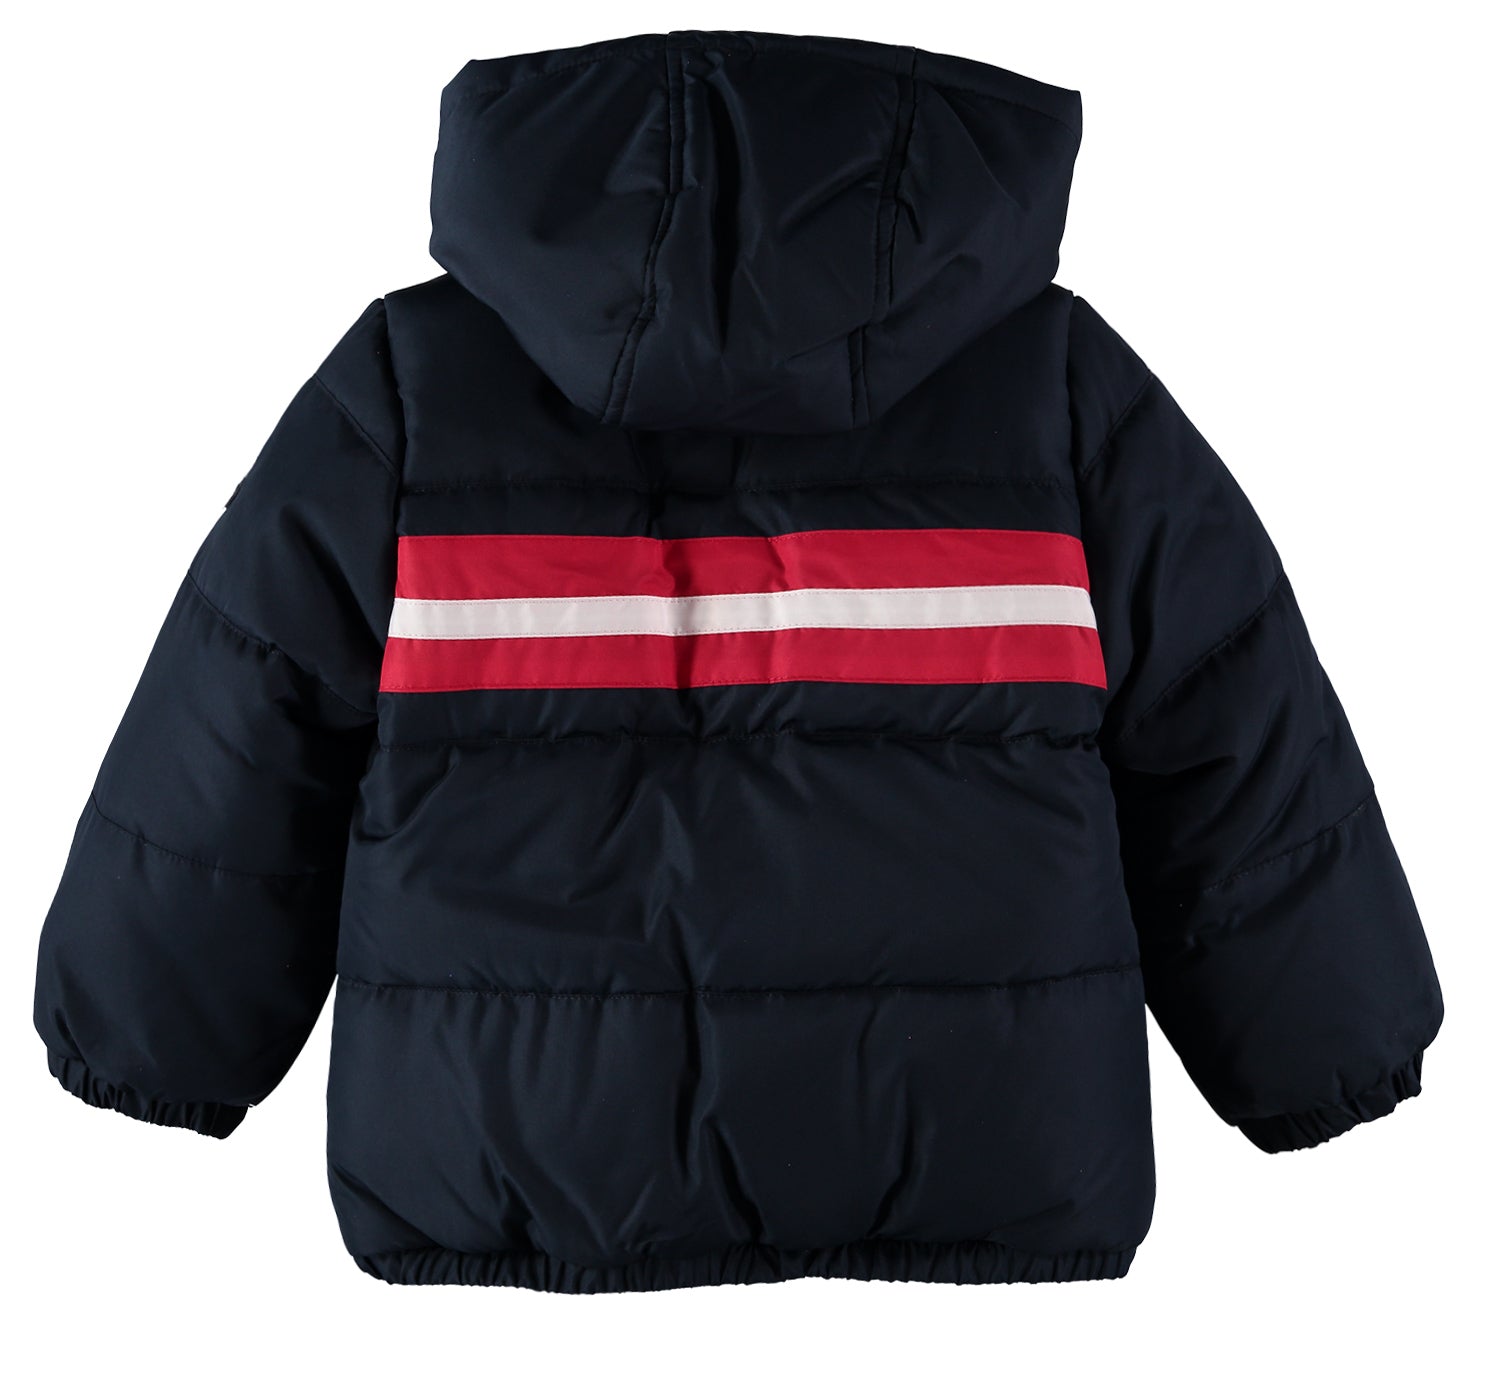 Osh Kosh Boys 2T-4T Stripe Puffer Jacket